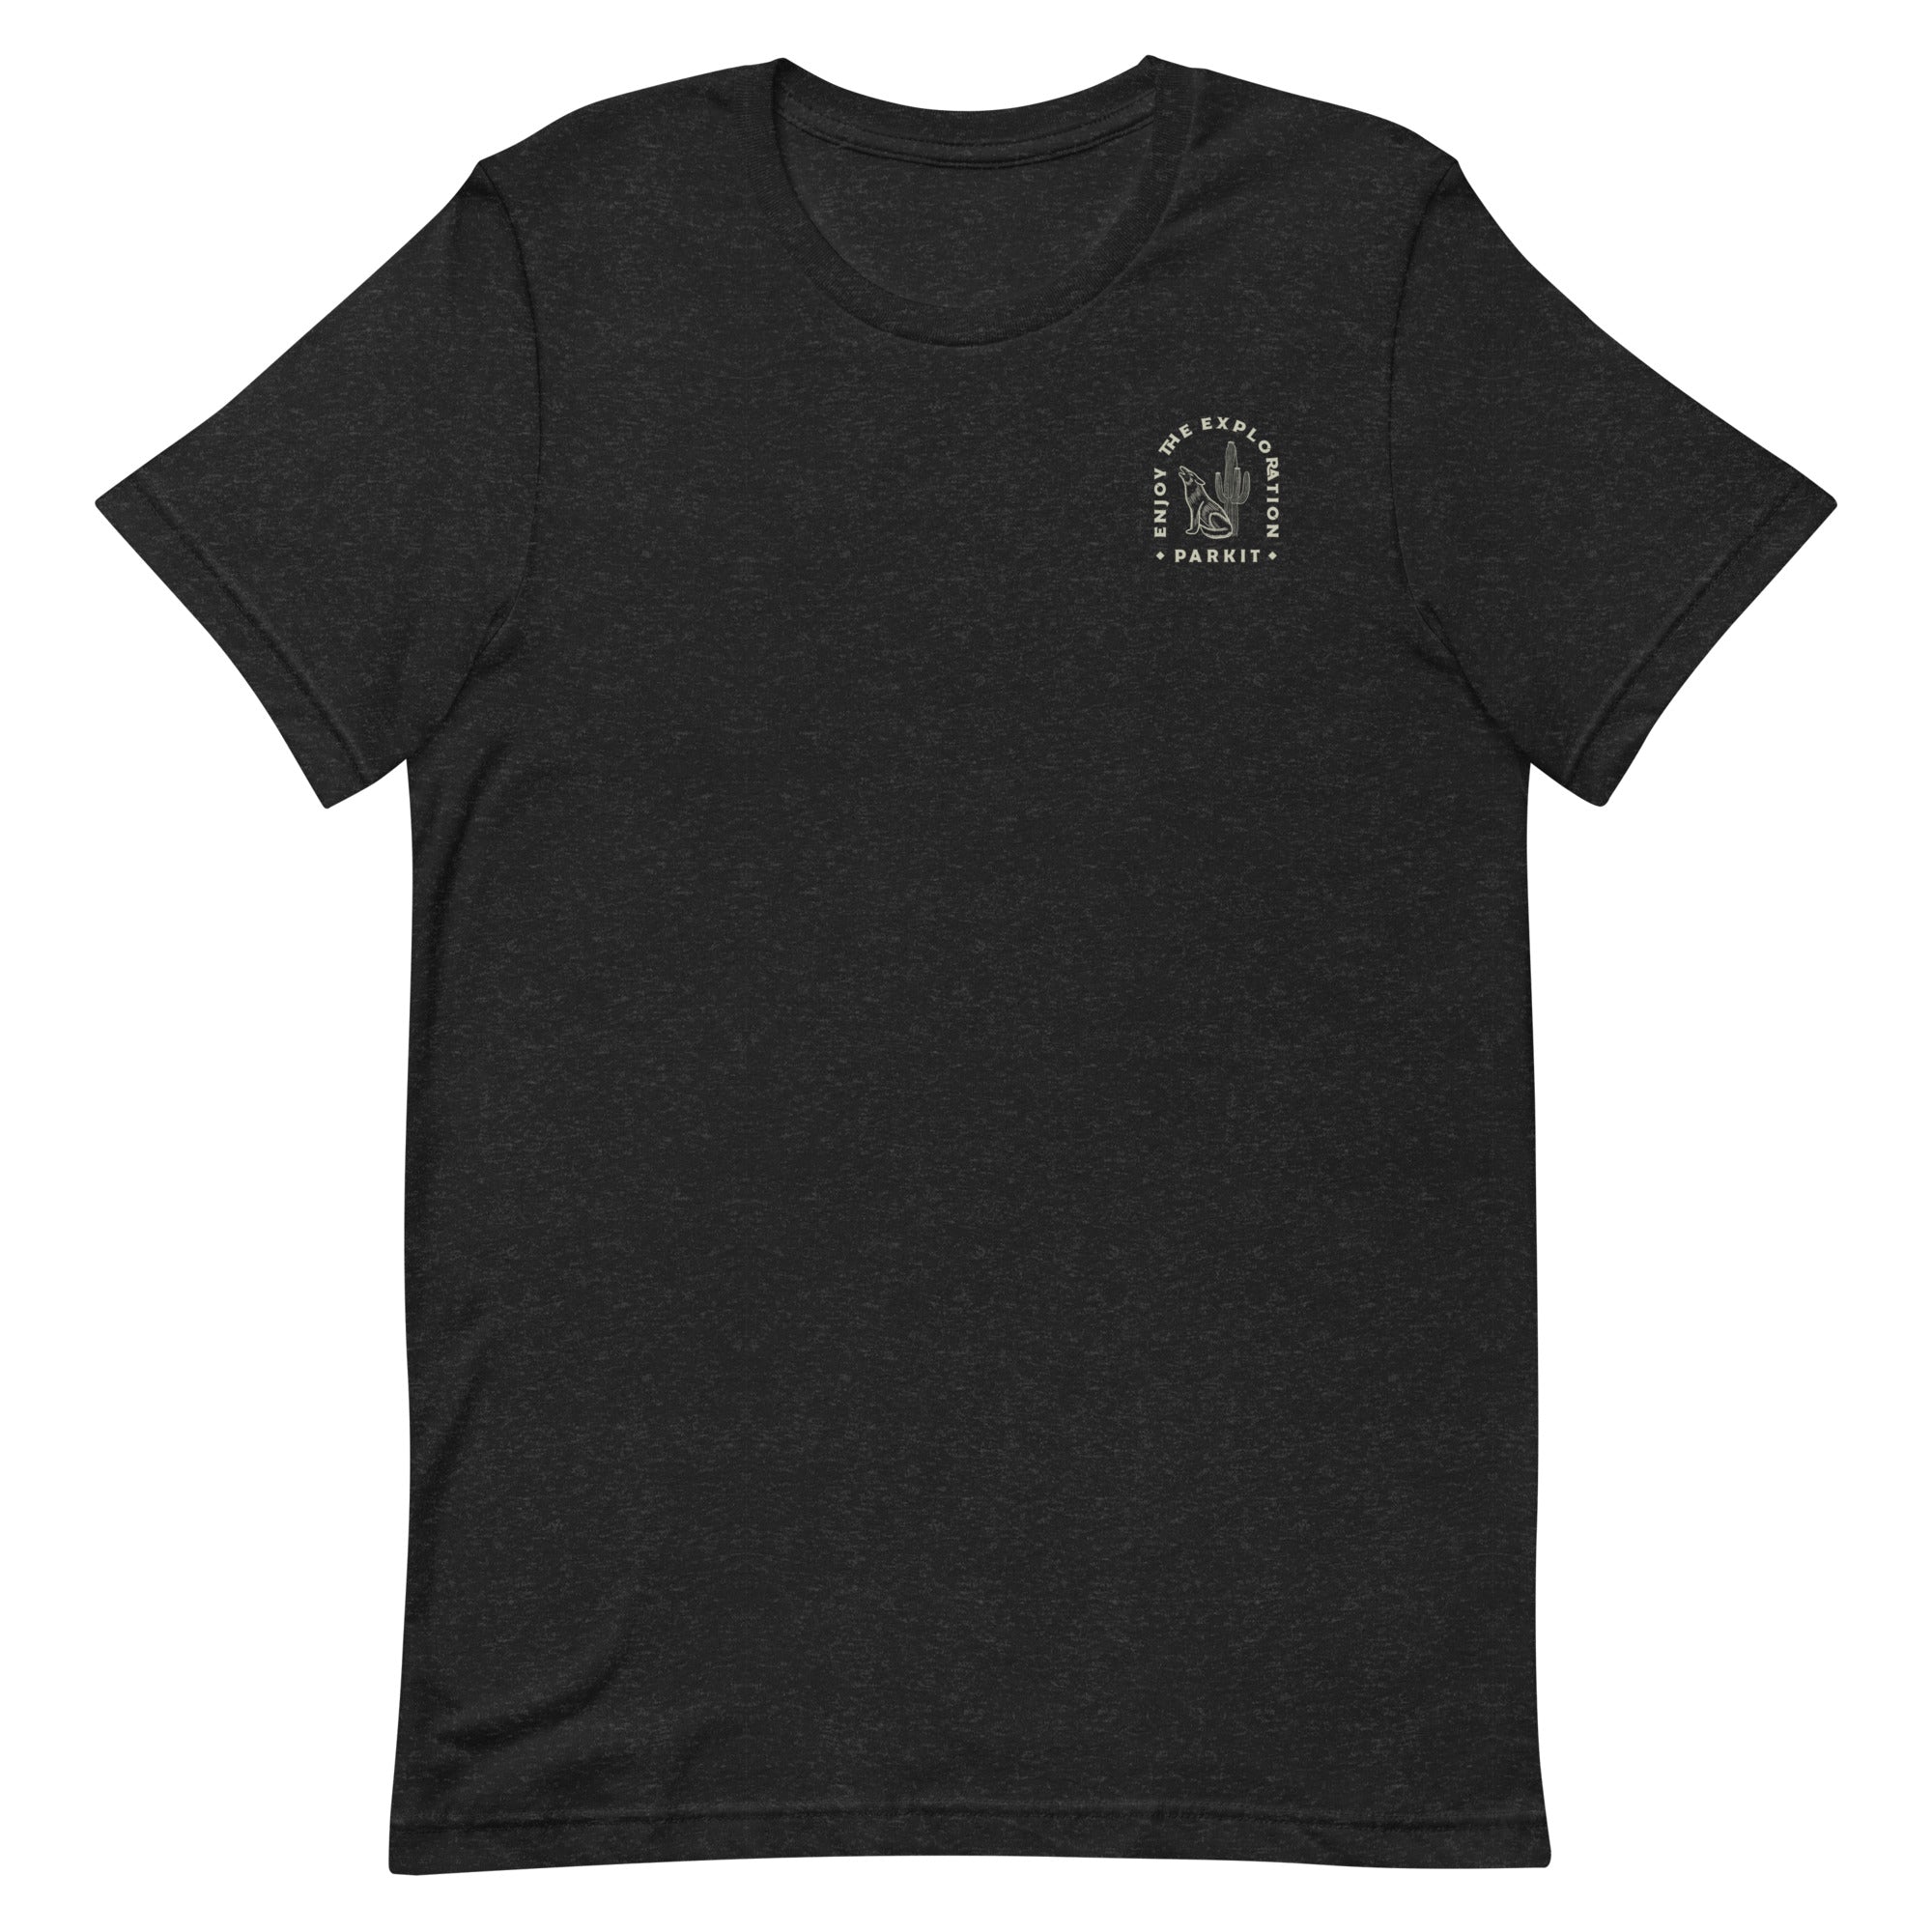 Coyote Unisex T-Shirt